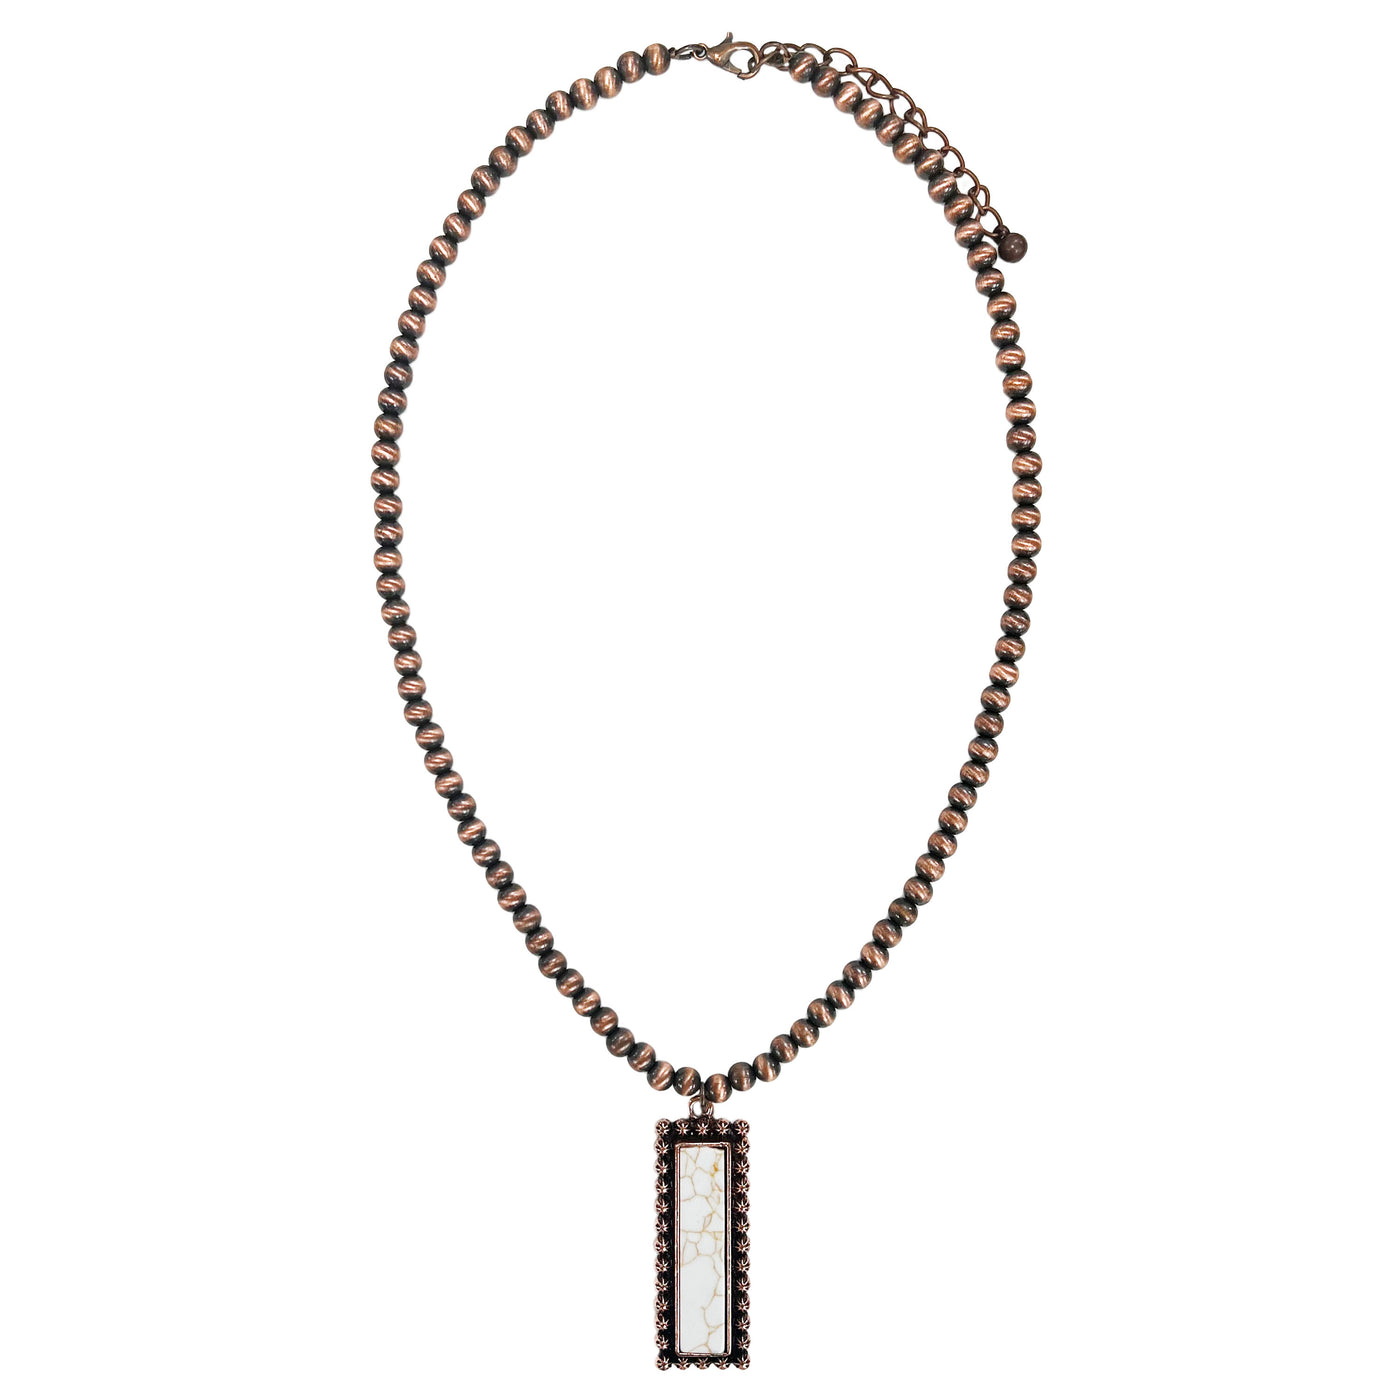 Sunlit Mesa Copper Beaded Necklace with Cream Pendant